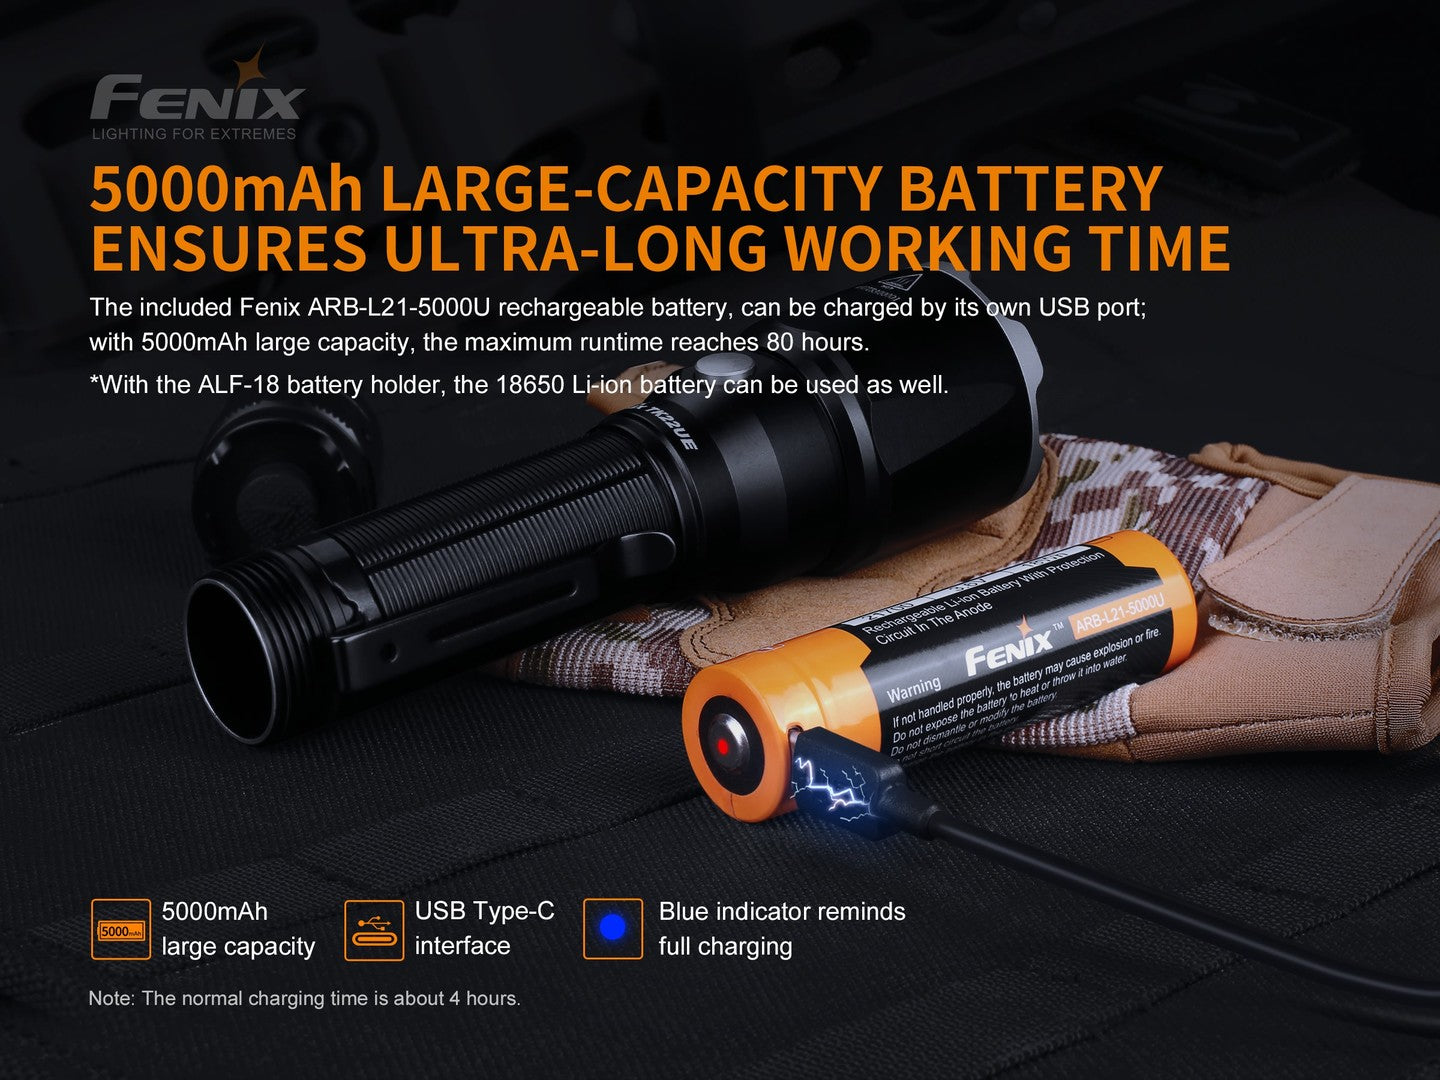 Fenix TK22 UE High Performance Tactical LED Flashlight